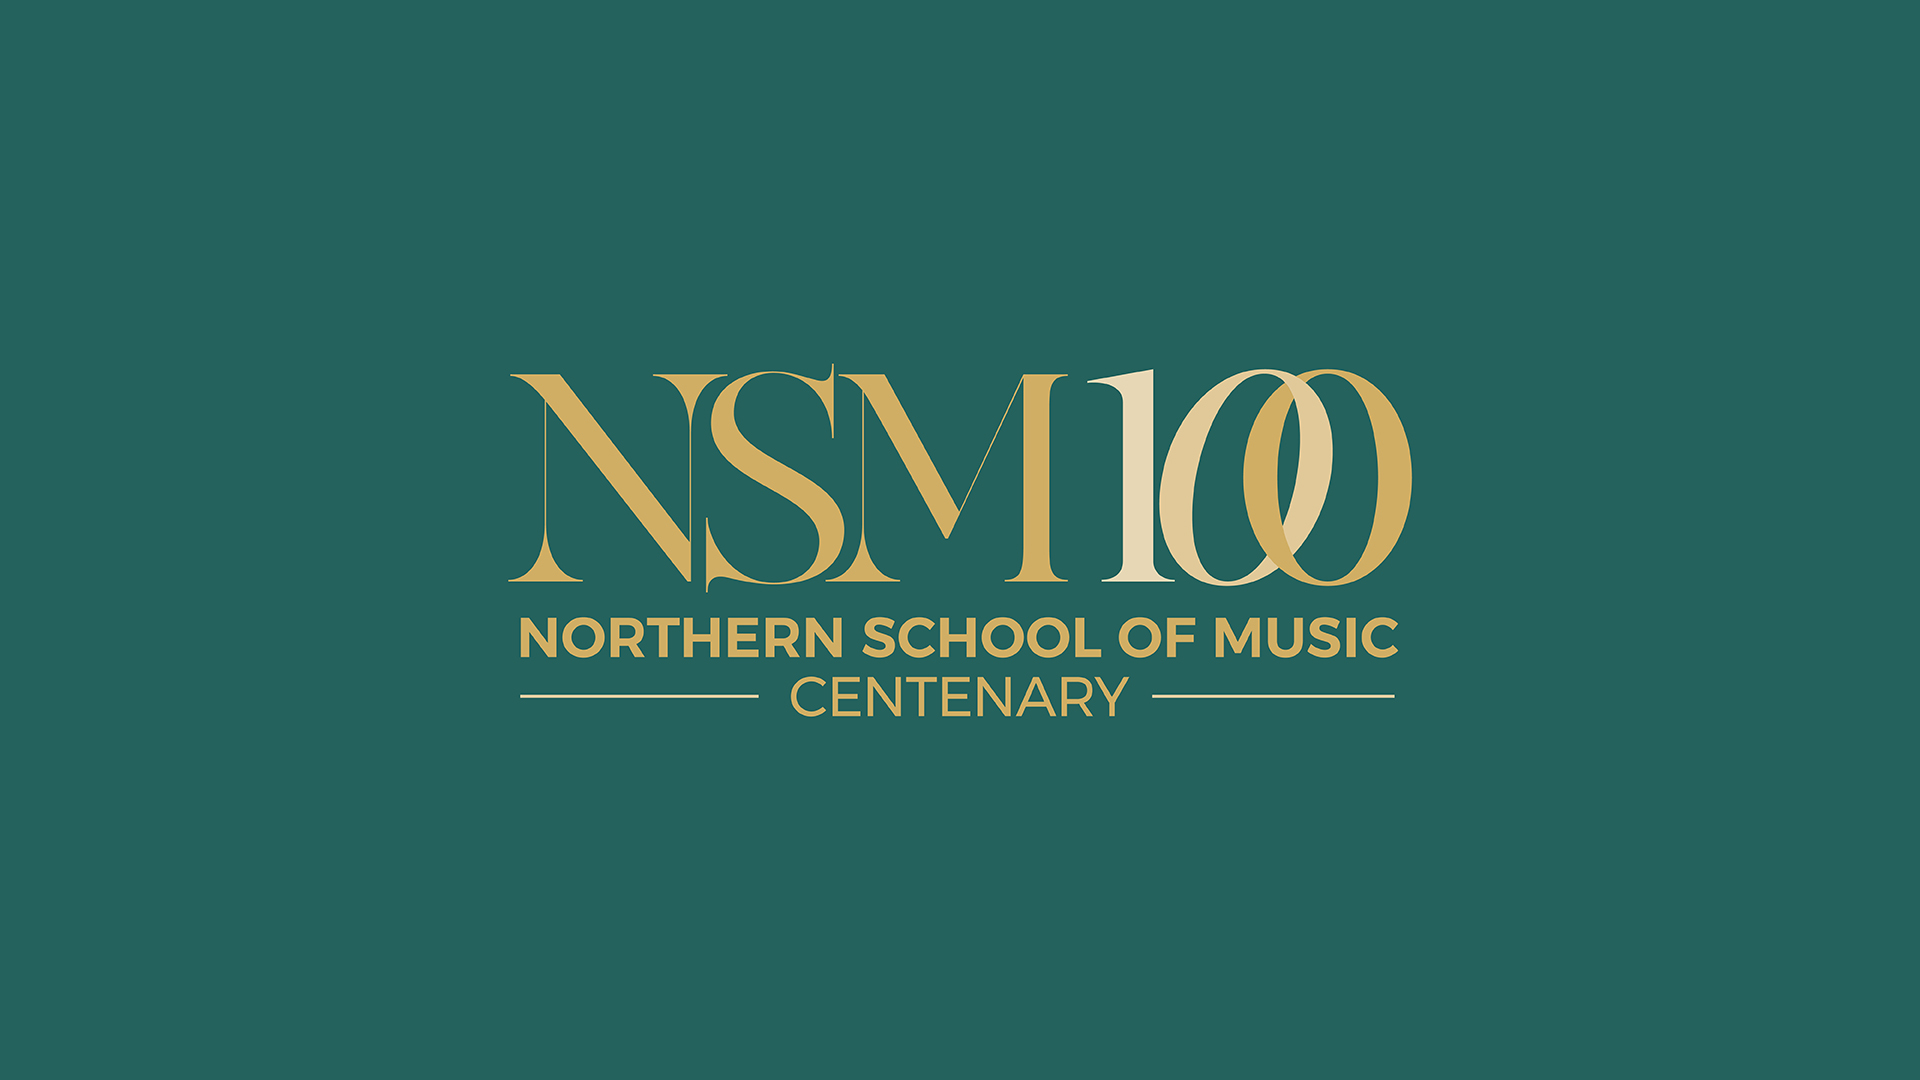 Northern School of Music Centenary logo.